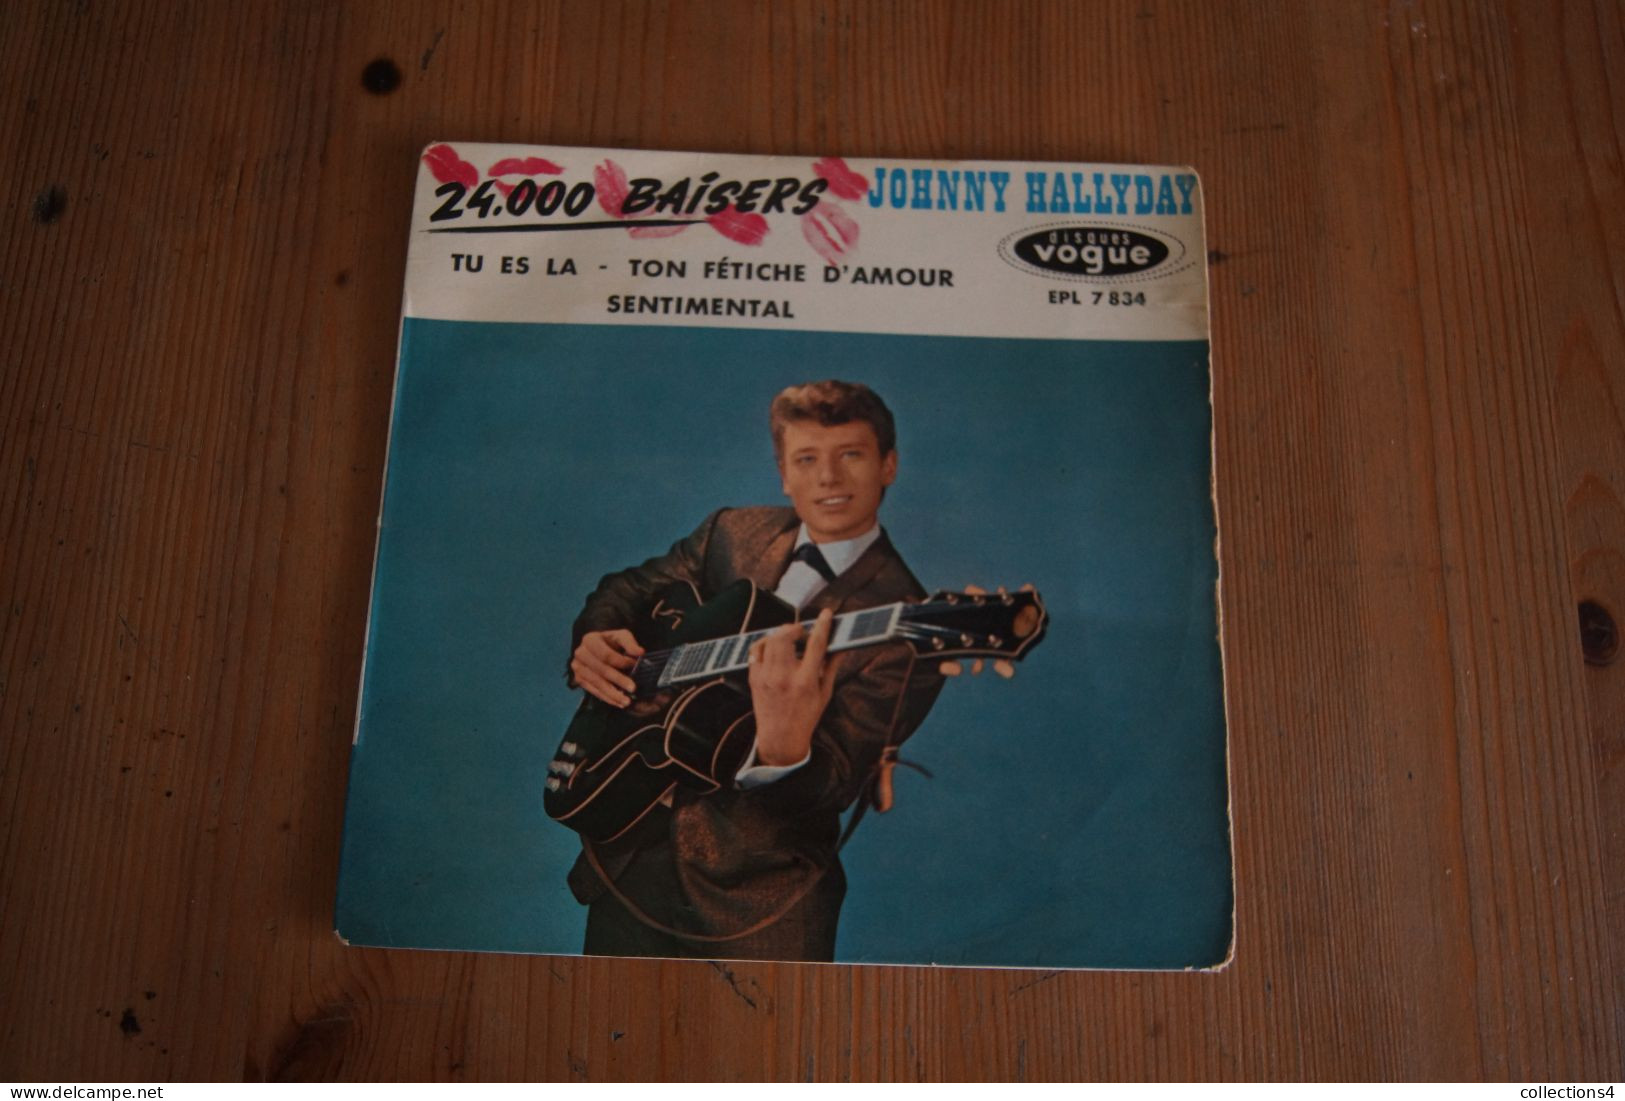 JOHNNY HALLYDAY 24 000 BAISERS  EP   1961 LANGUETTE VALEUR+ - 45 Rpm - Maxi-Single